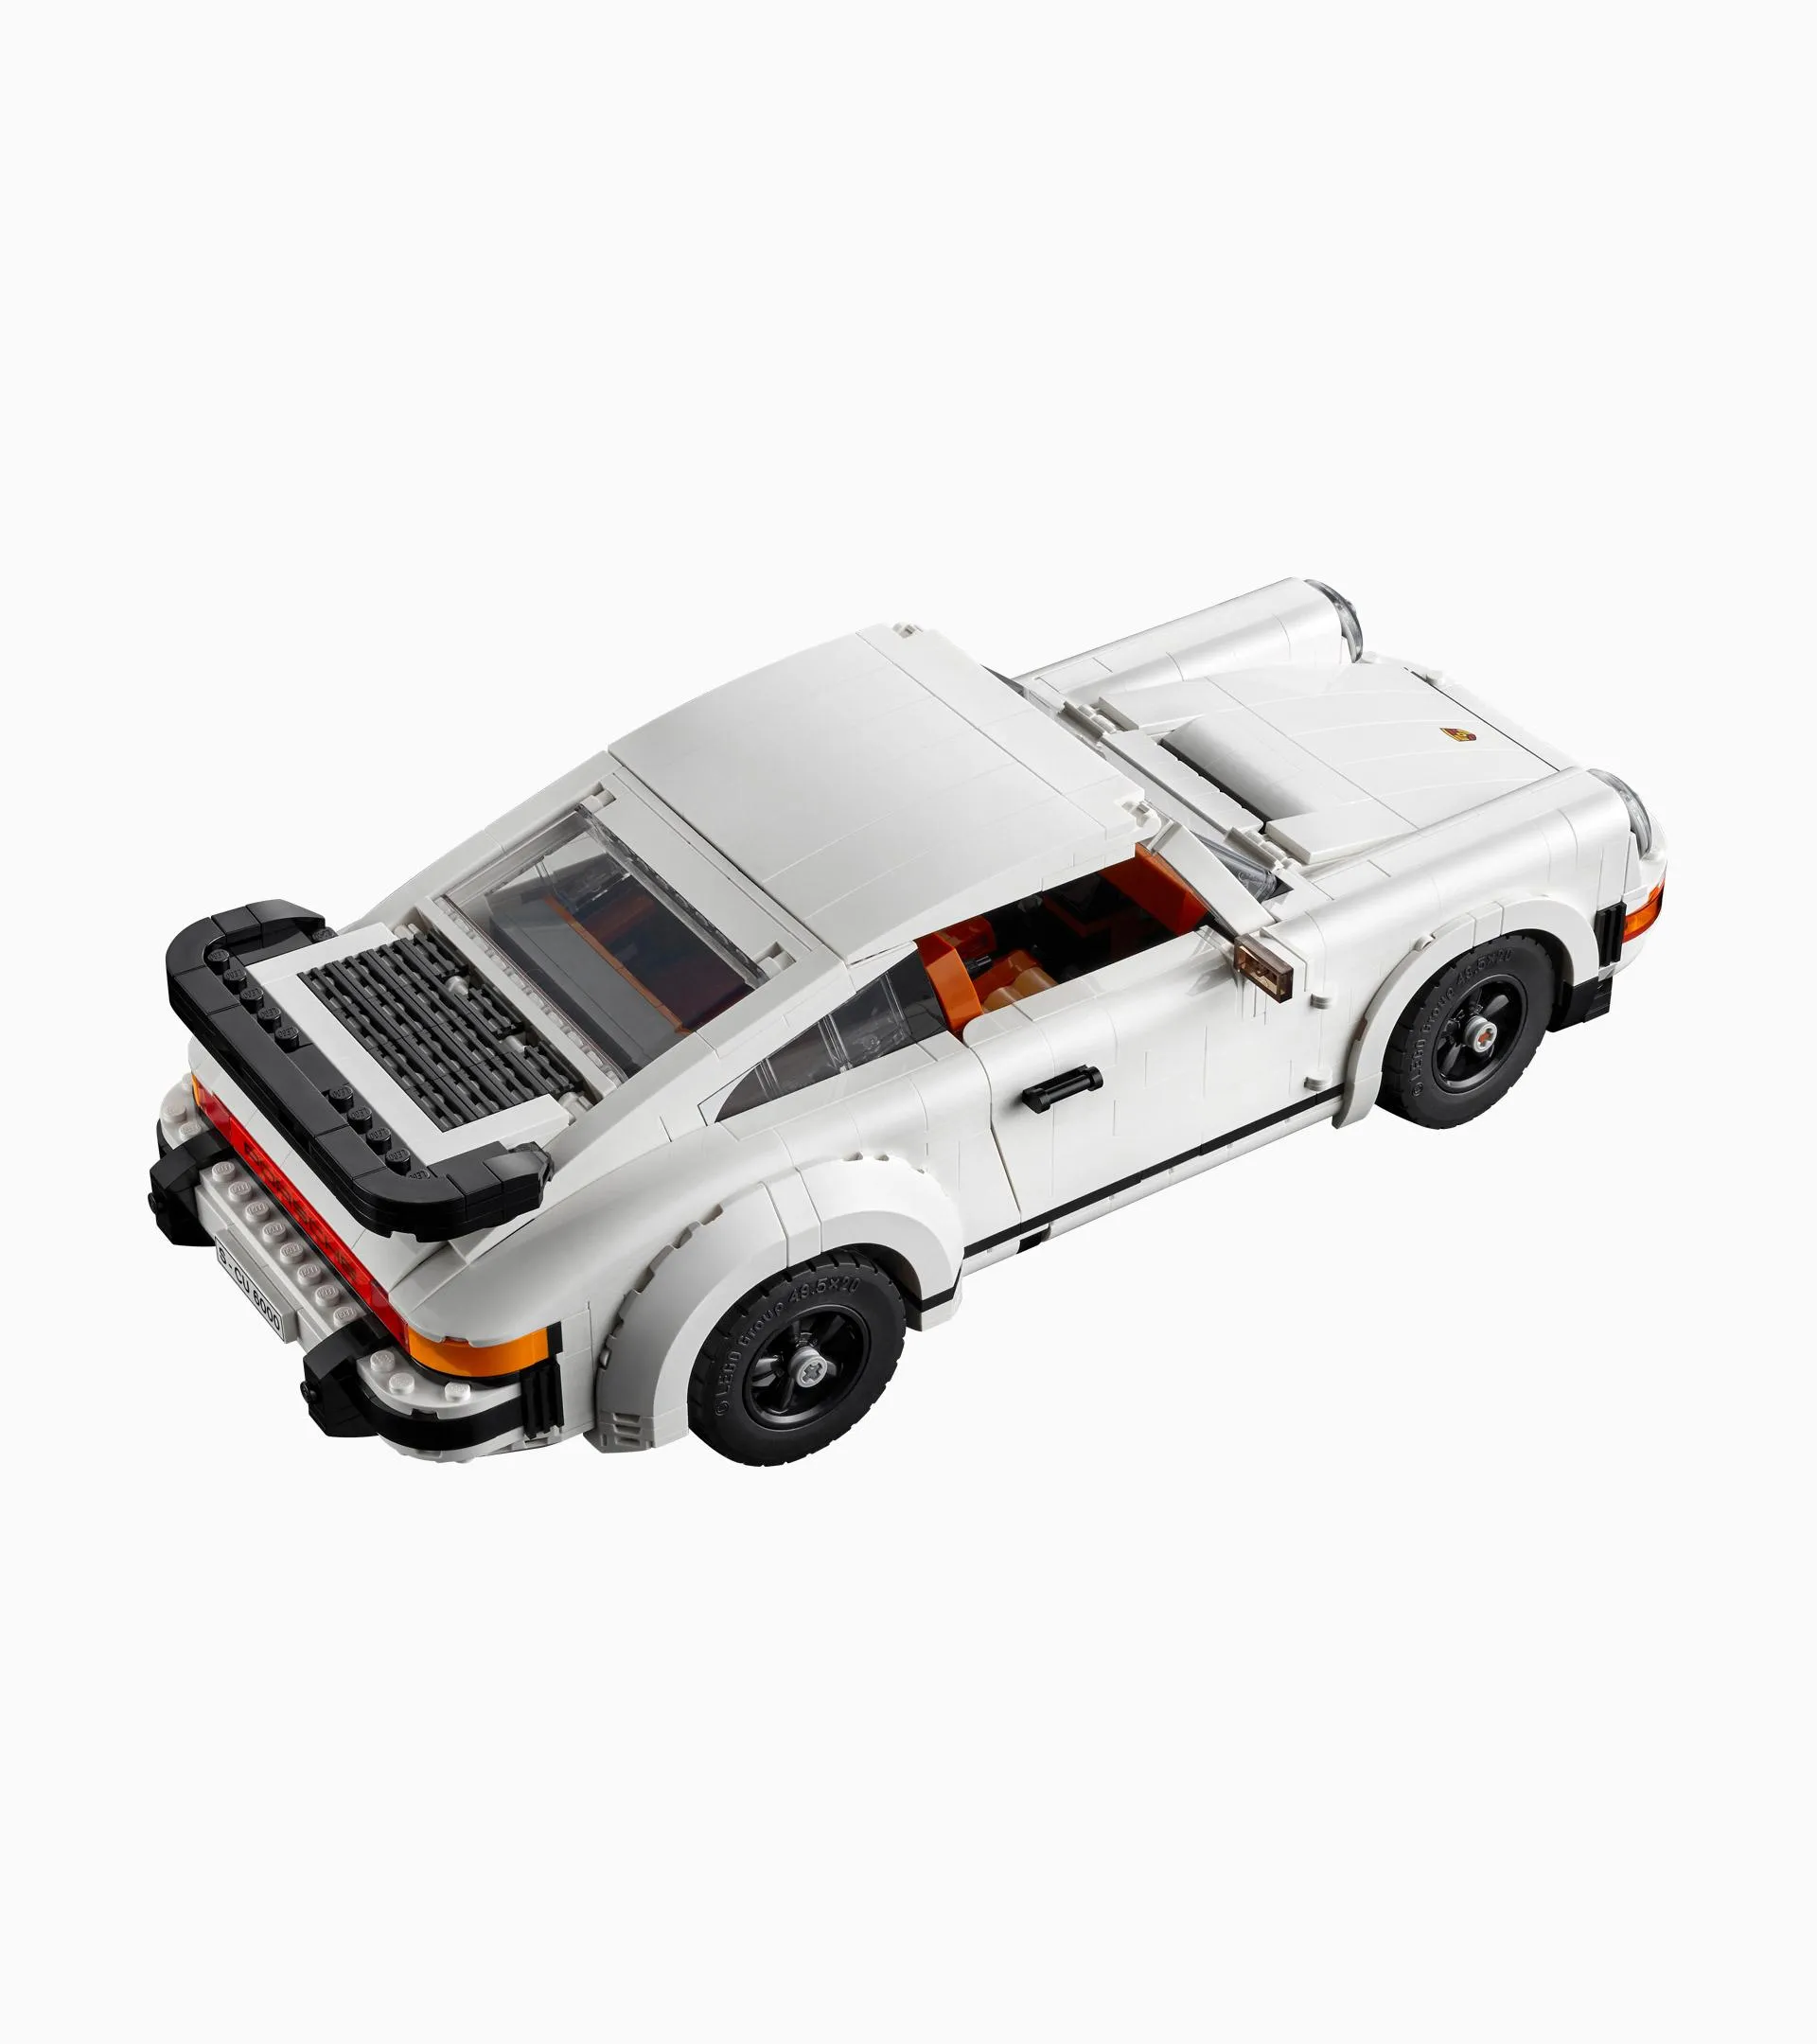 LEGO Creator Expert: Porsche 911 - Imagine That Toys